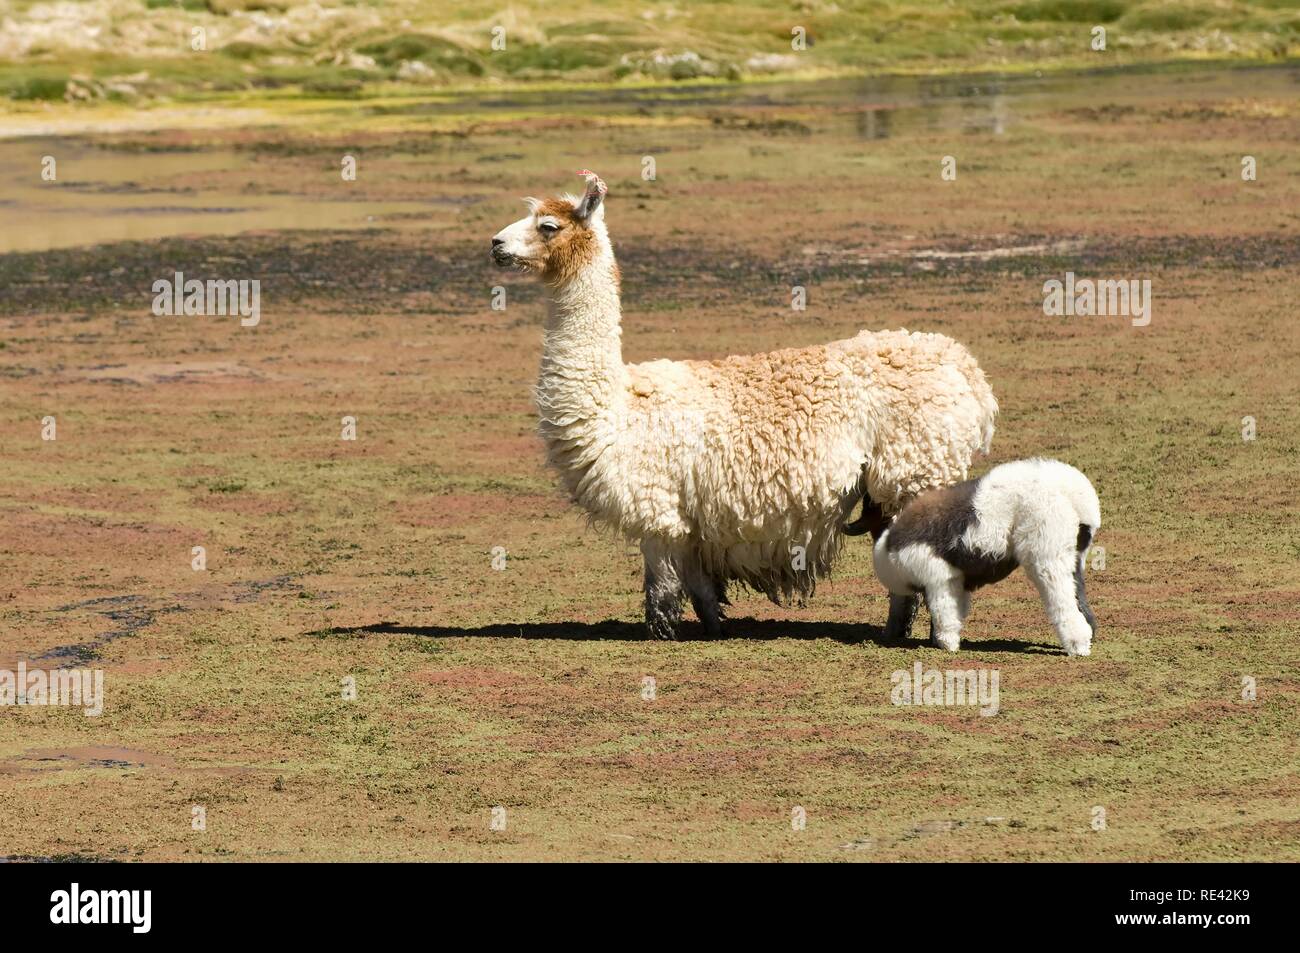 Llama (Lama glama) with young, Atacama Desert, Antofagasta region, Chile, South America Stock Photo